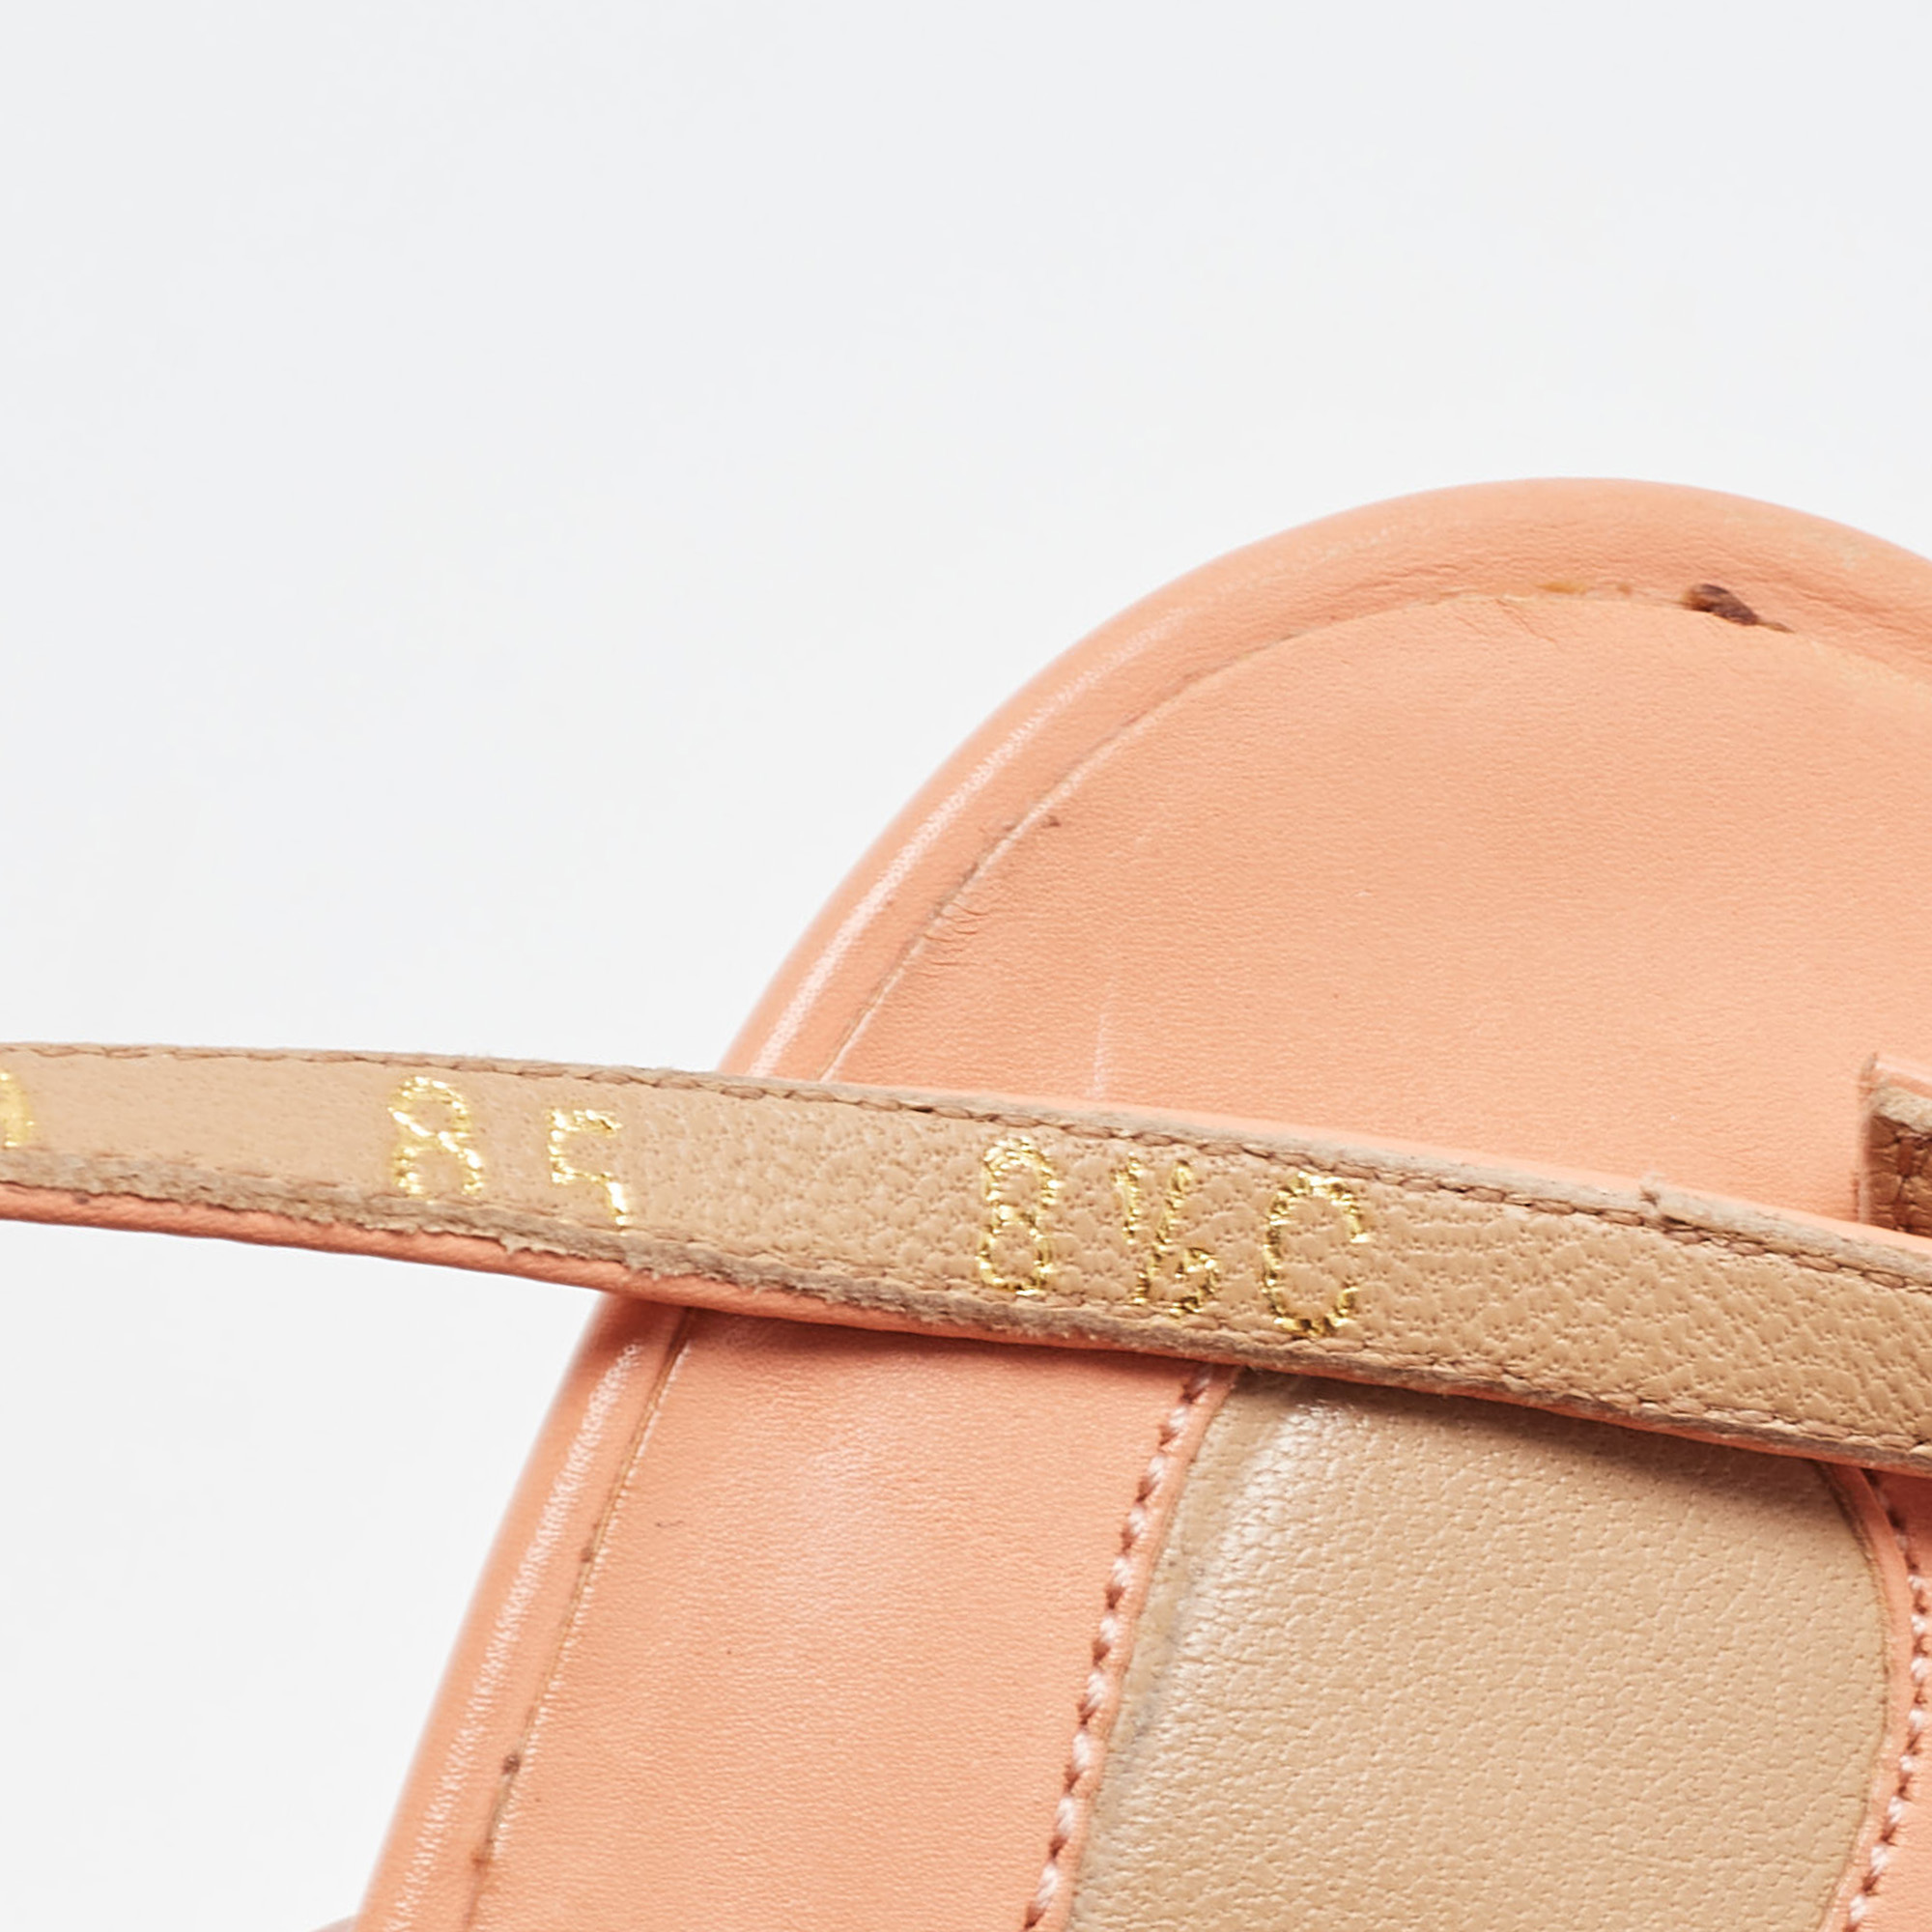 Salvatore Ferragamo Peach Leather Bow T-Bar Ankle Strap Sandals Size 39